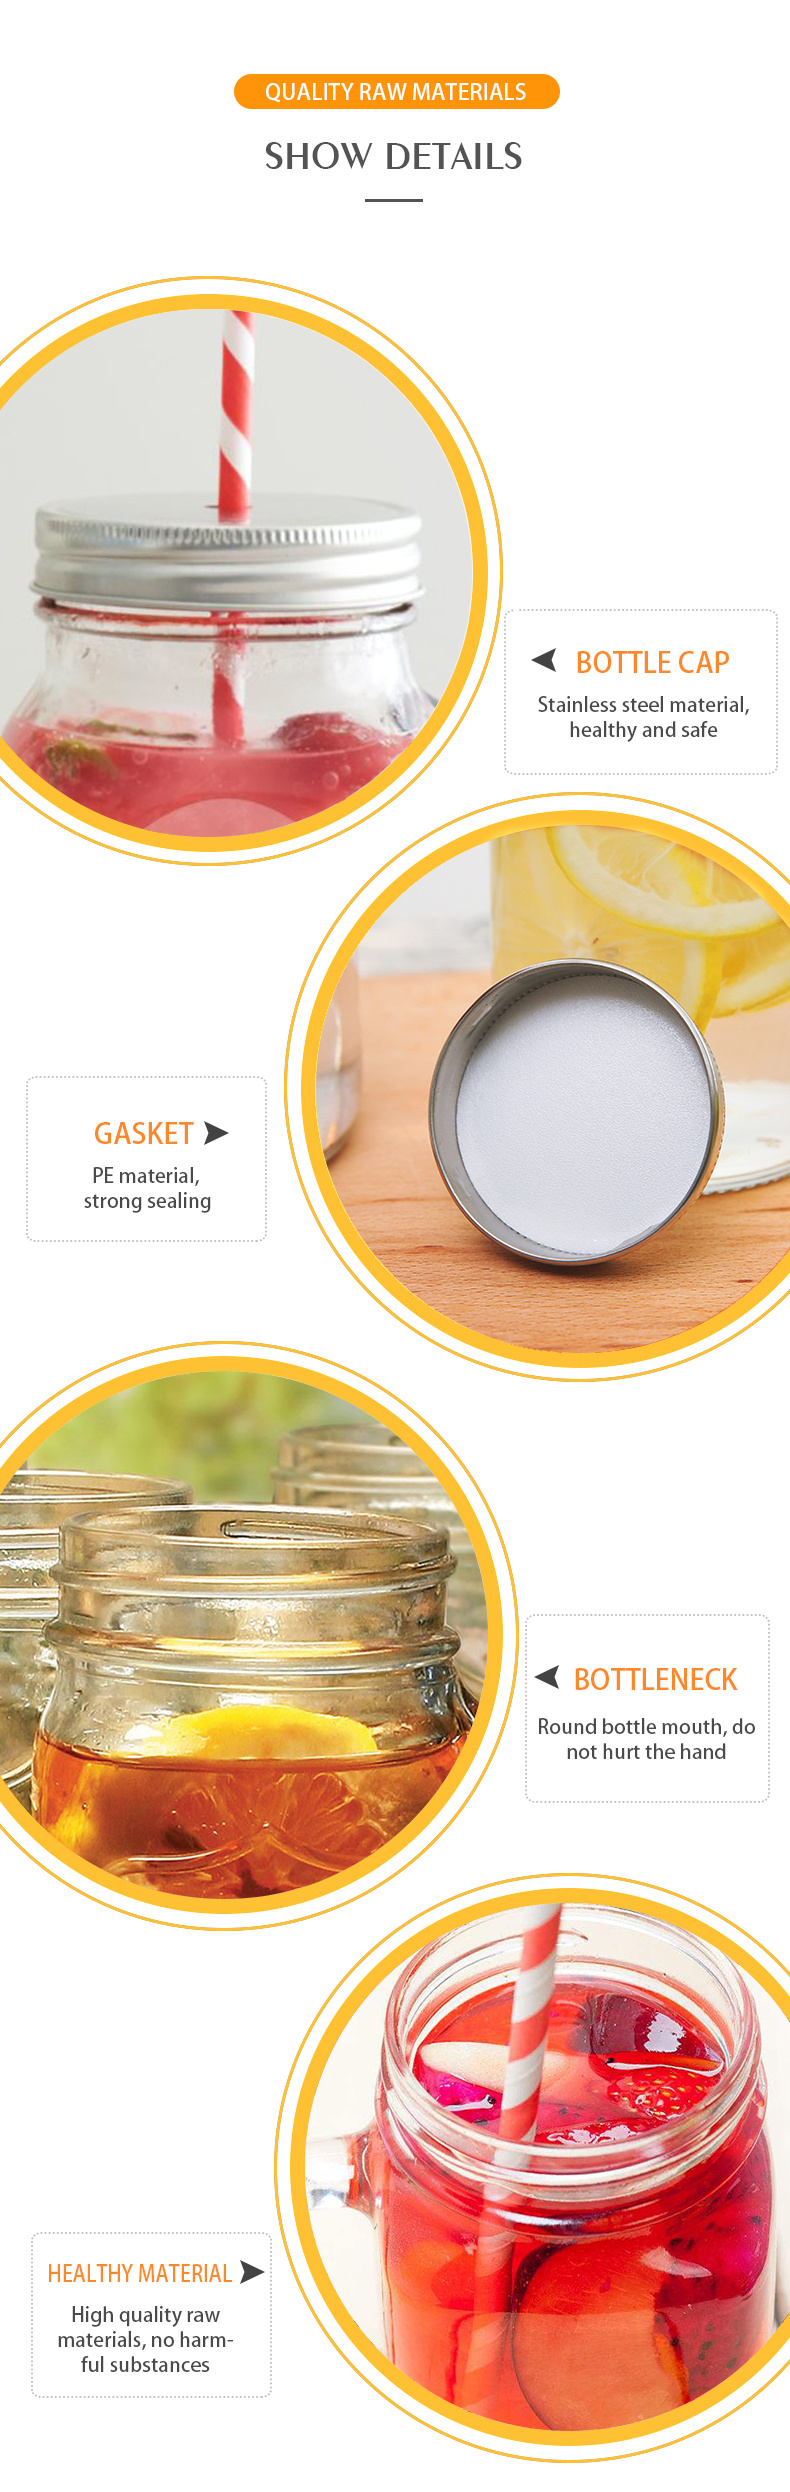 Spot Products Embossed Clear Drinking Mug Wholesale Glass Mason Jar